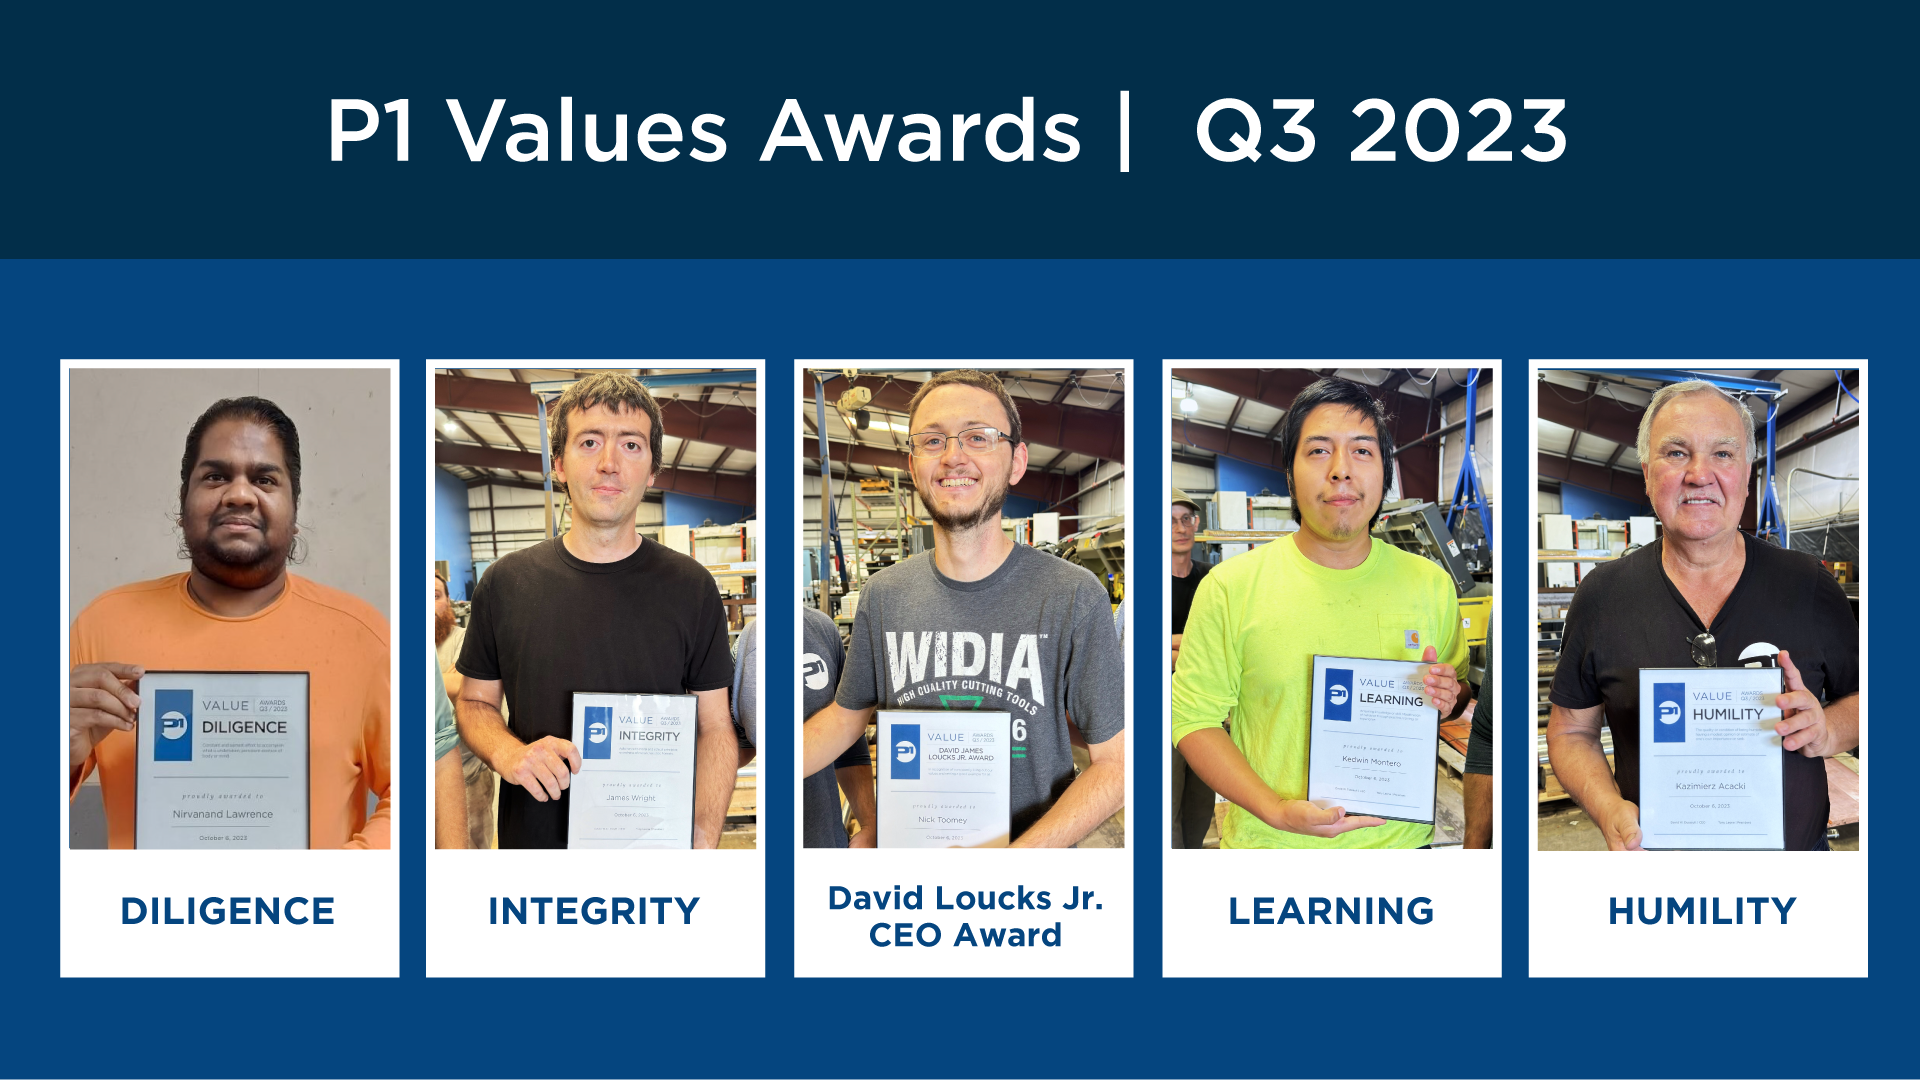 P1 Values Awards Q3 2023